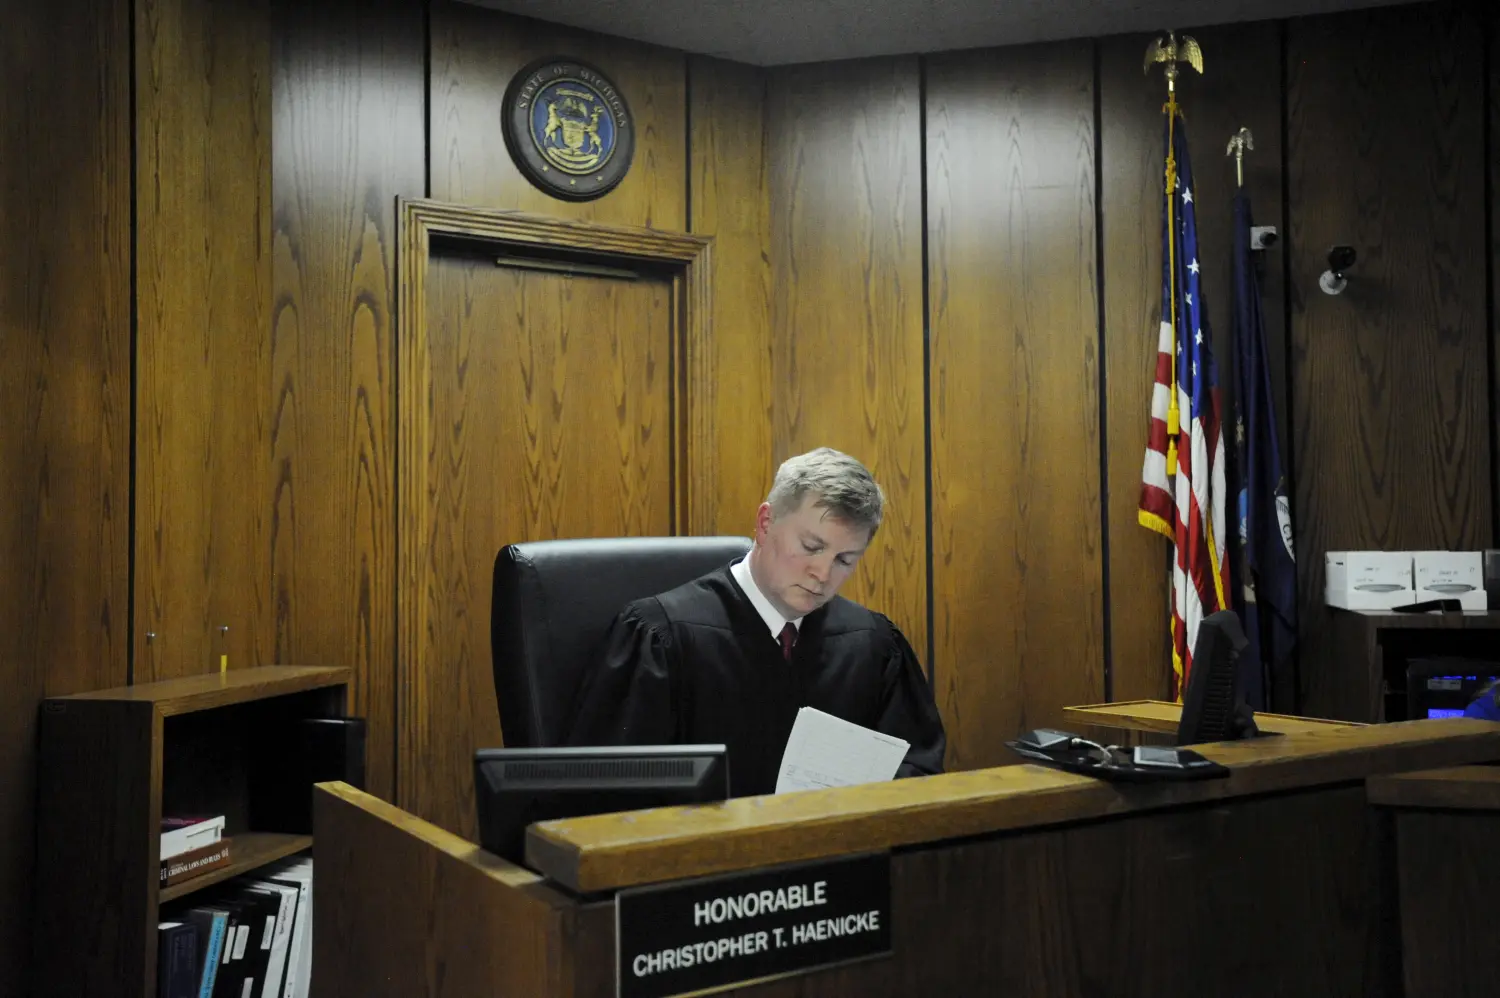 Judge Christopher Haenicke fills out paperwork